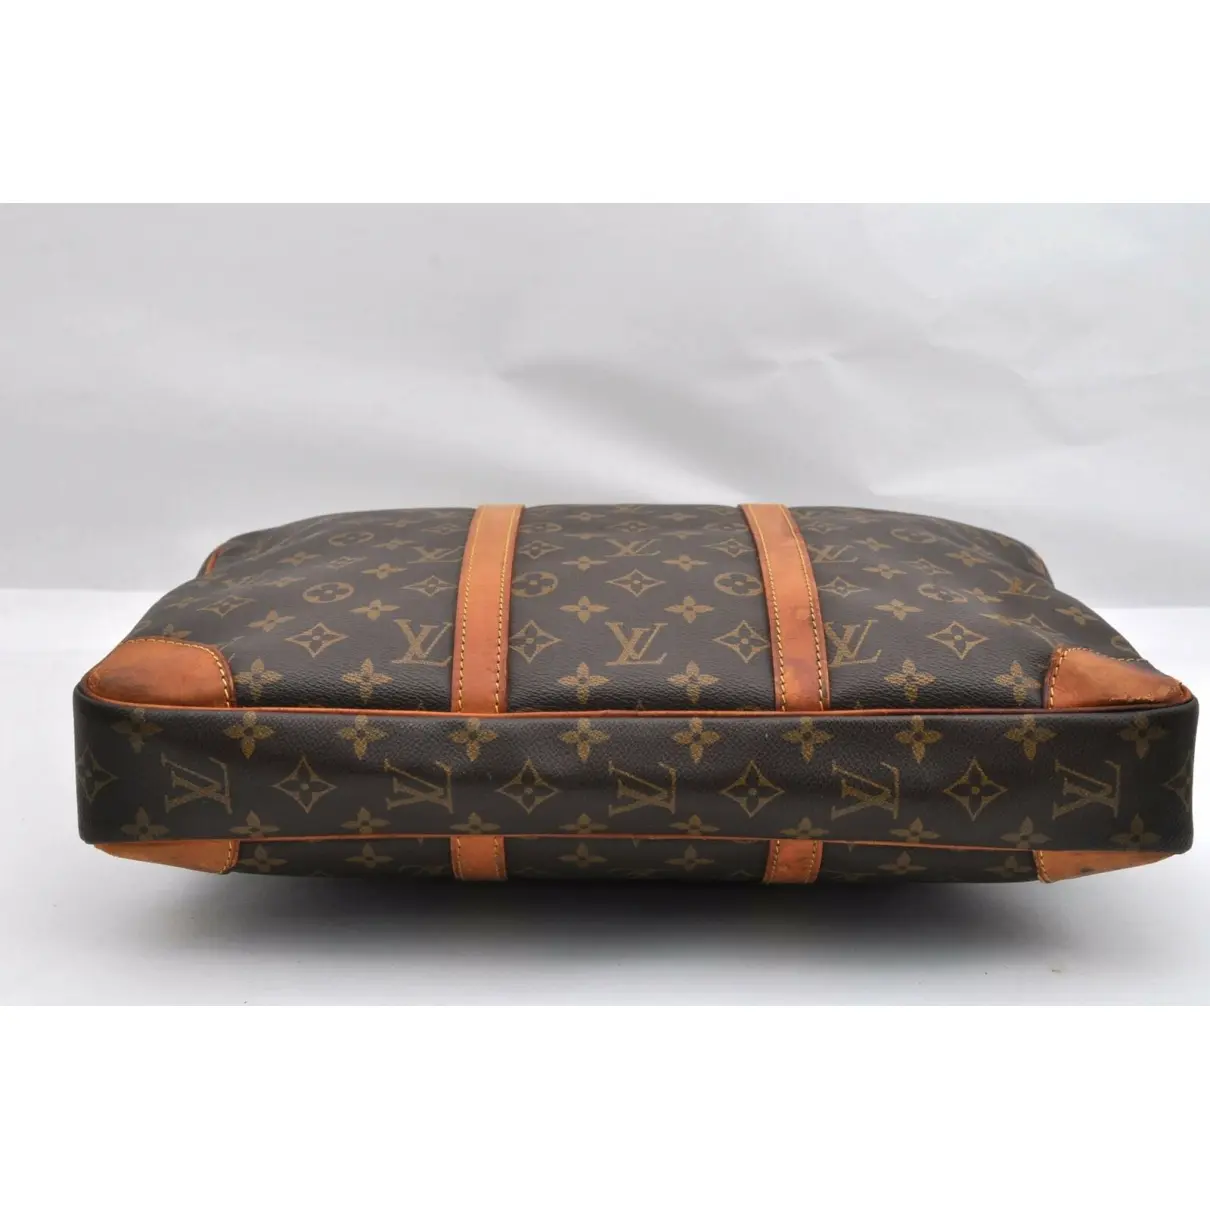 Porte Documents Voyage cloth handbag Louis Vuitton